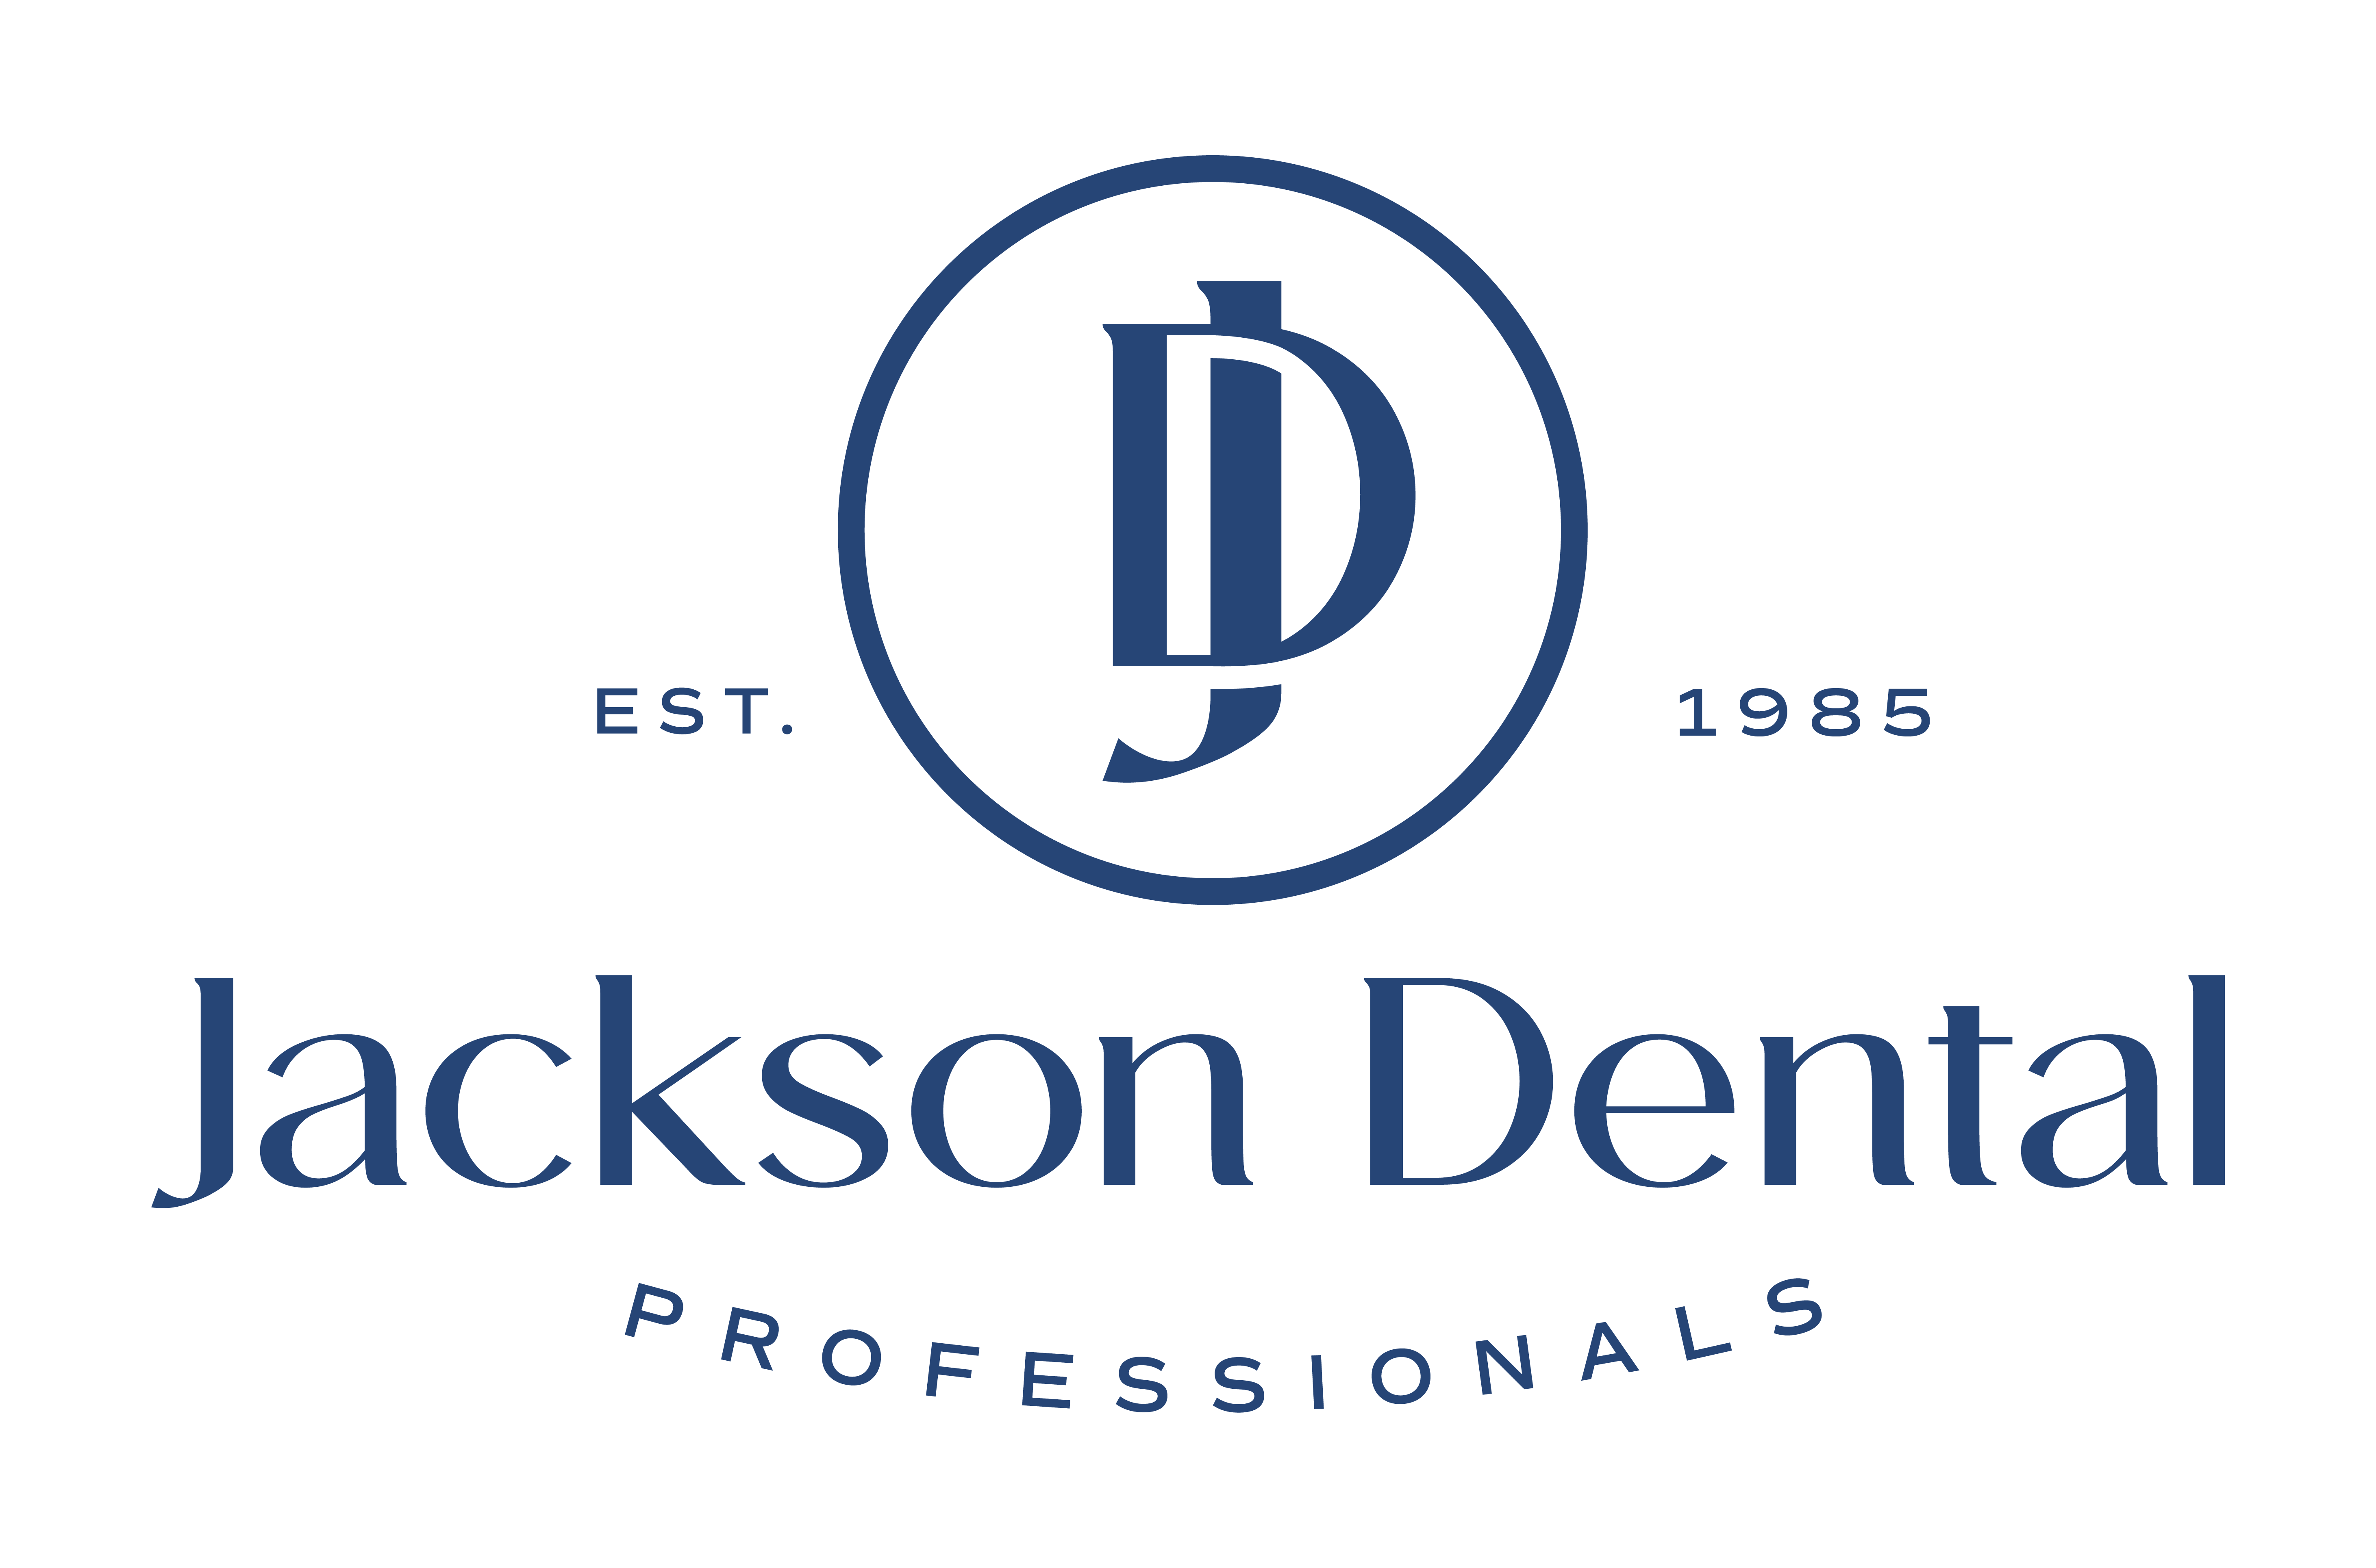 Jackson Dental